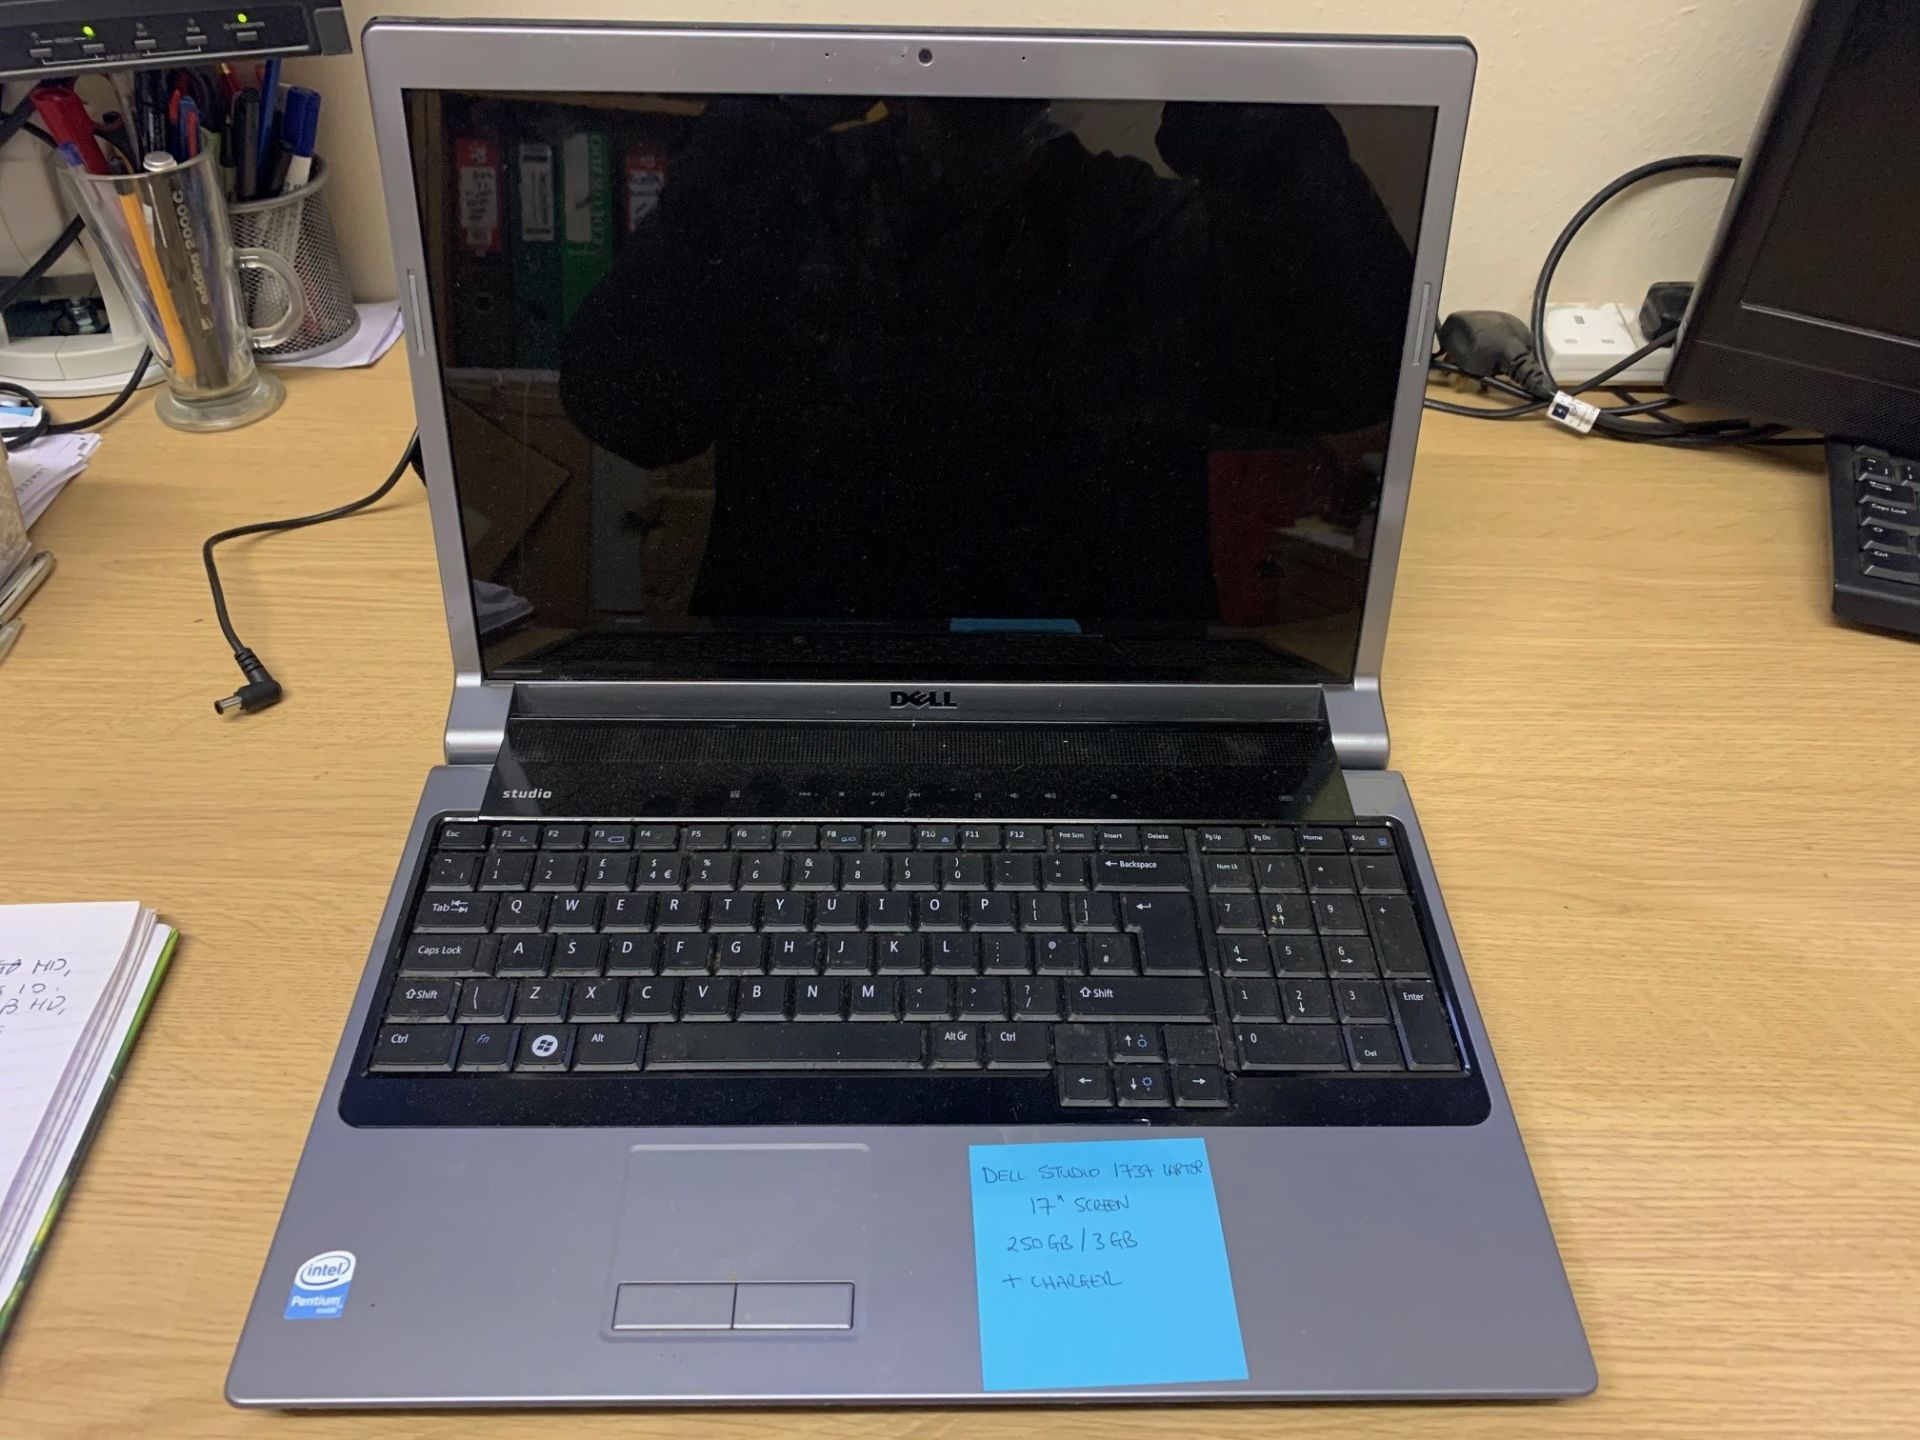 Dell Studio 1737 Laptop - 250GB Hard Drive, 3GB RAM, 17" Screen, Windows Vista & Charger